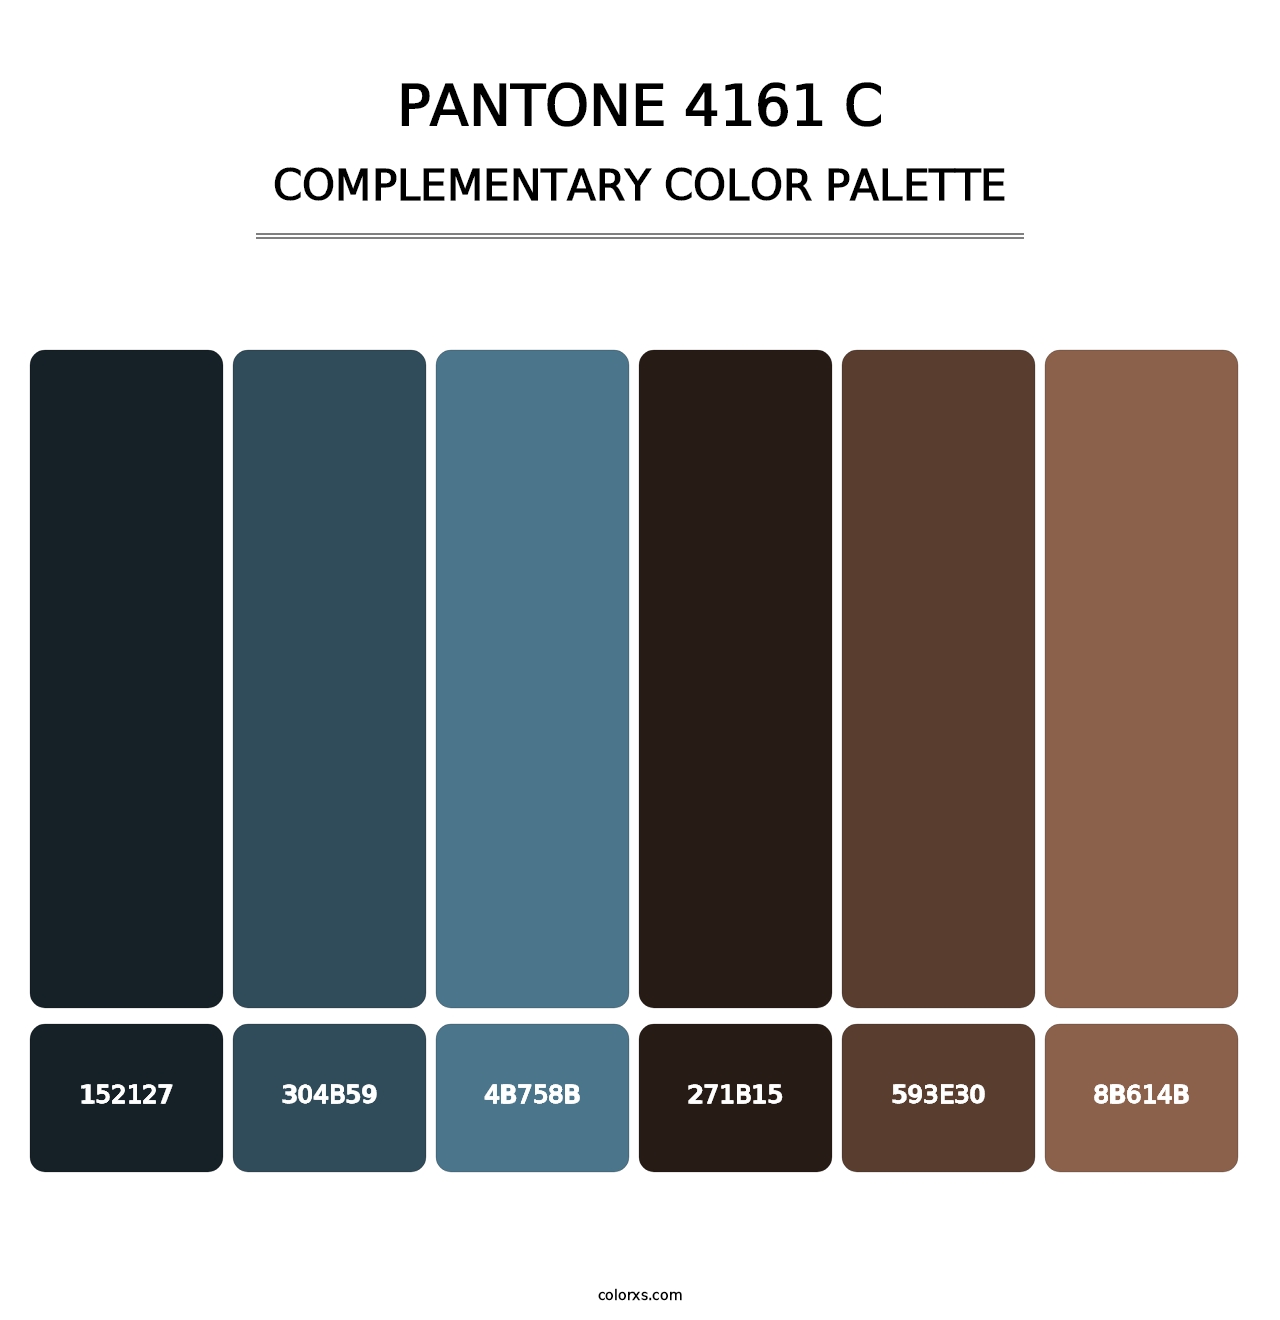 PANTONE 4161 C - Complementary Color Palette